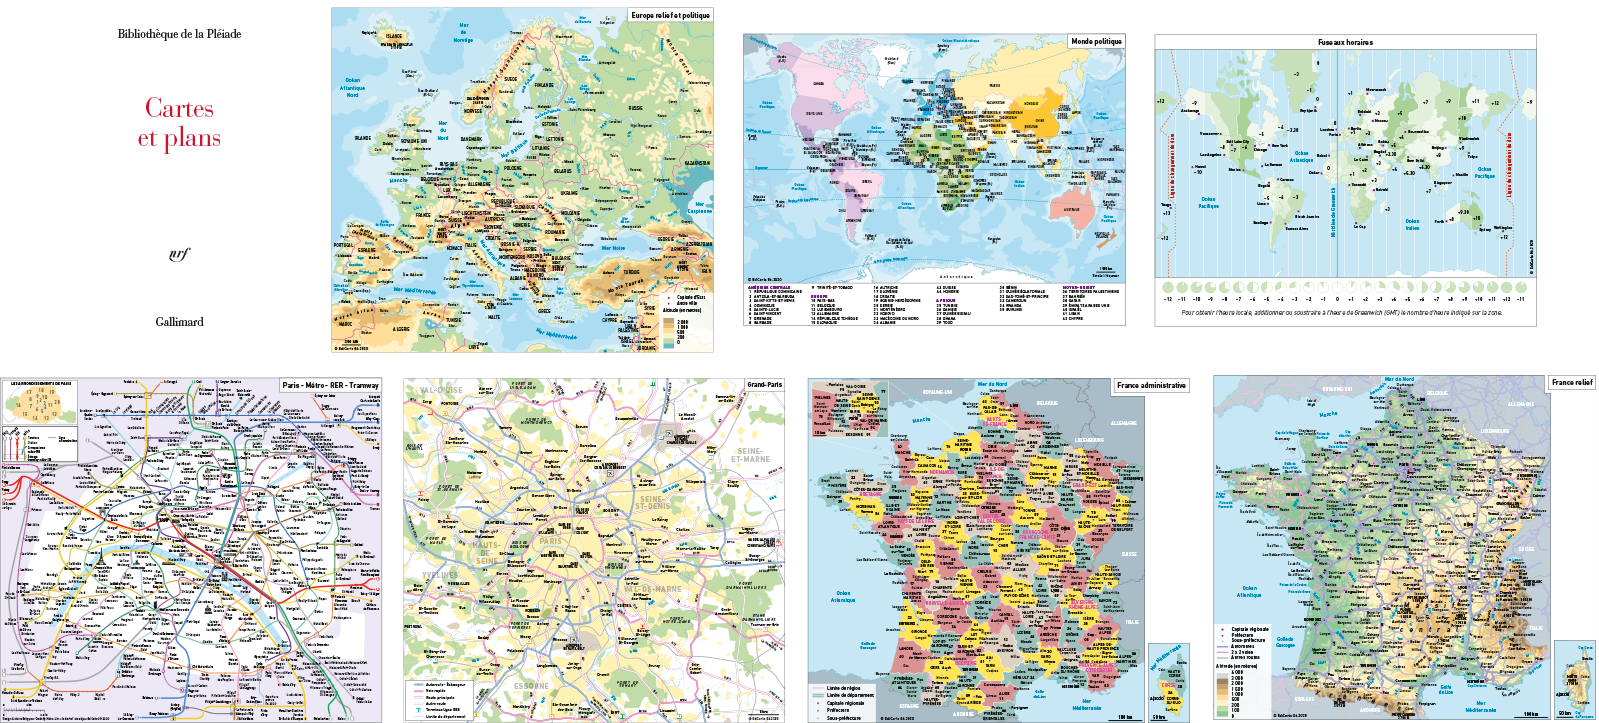 Atlas pour agenda - Bibliothèque de la Pléiade - Gallimard - EdiCarto - agence de cartographie spécialisée - Communication - agenda et calendrier